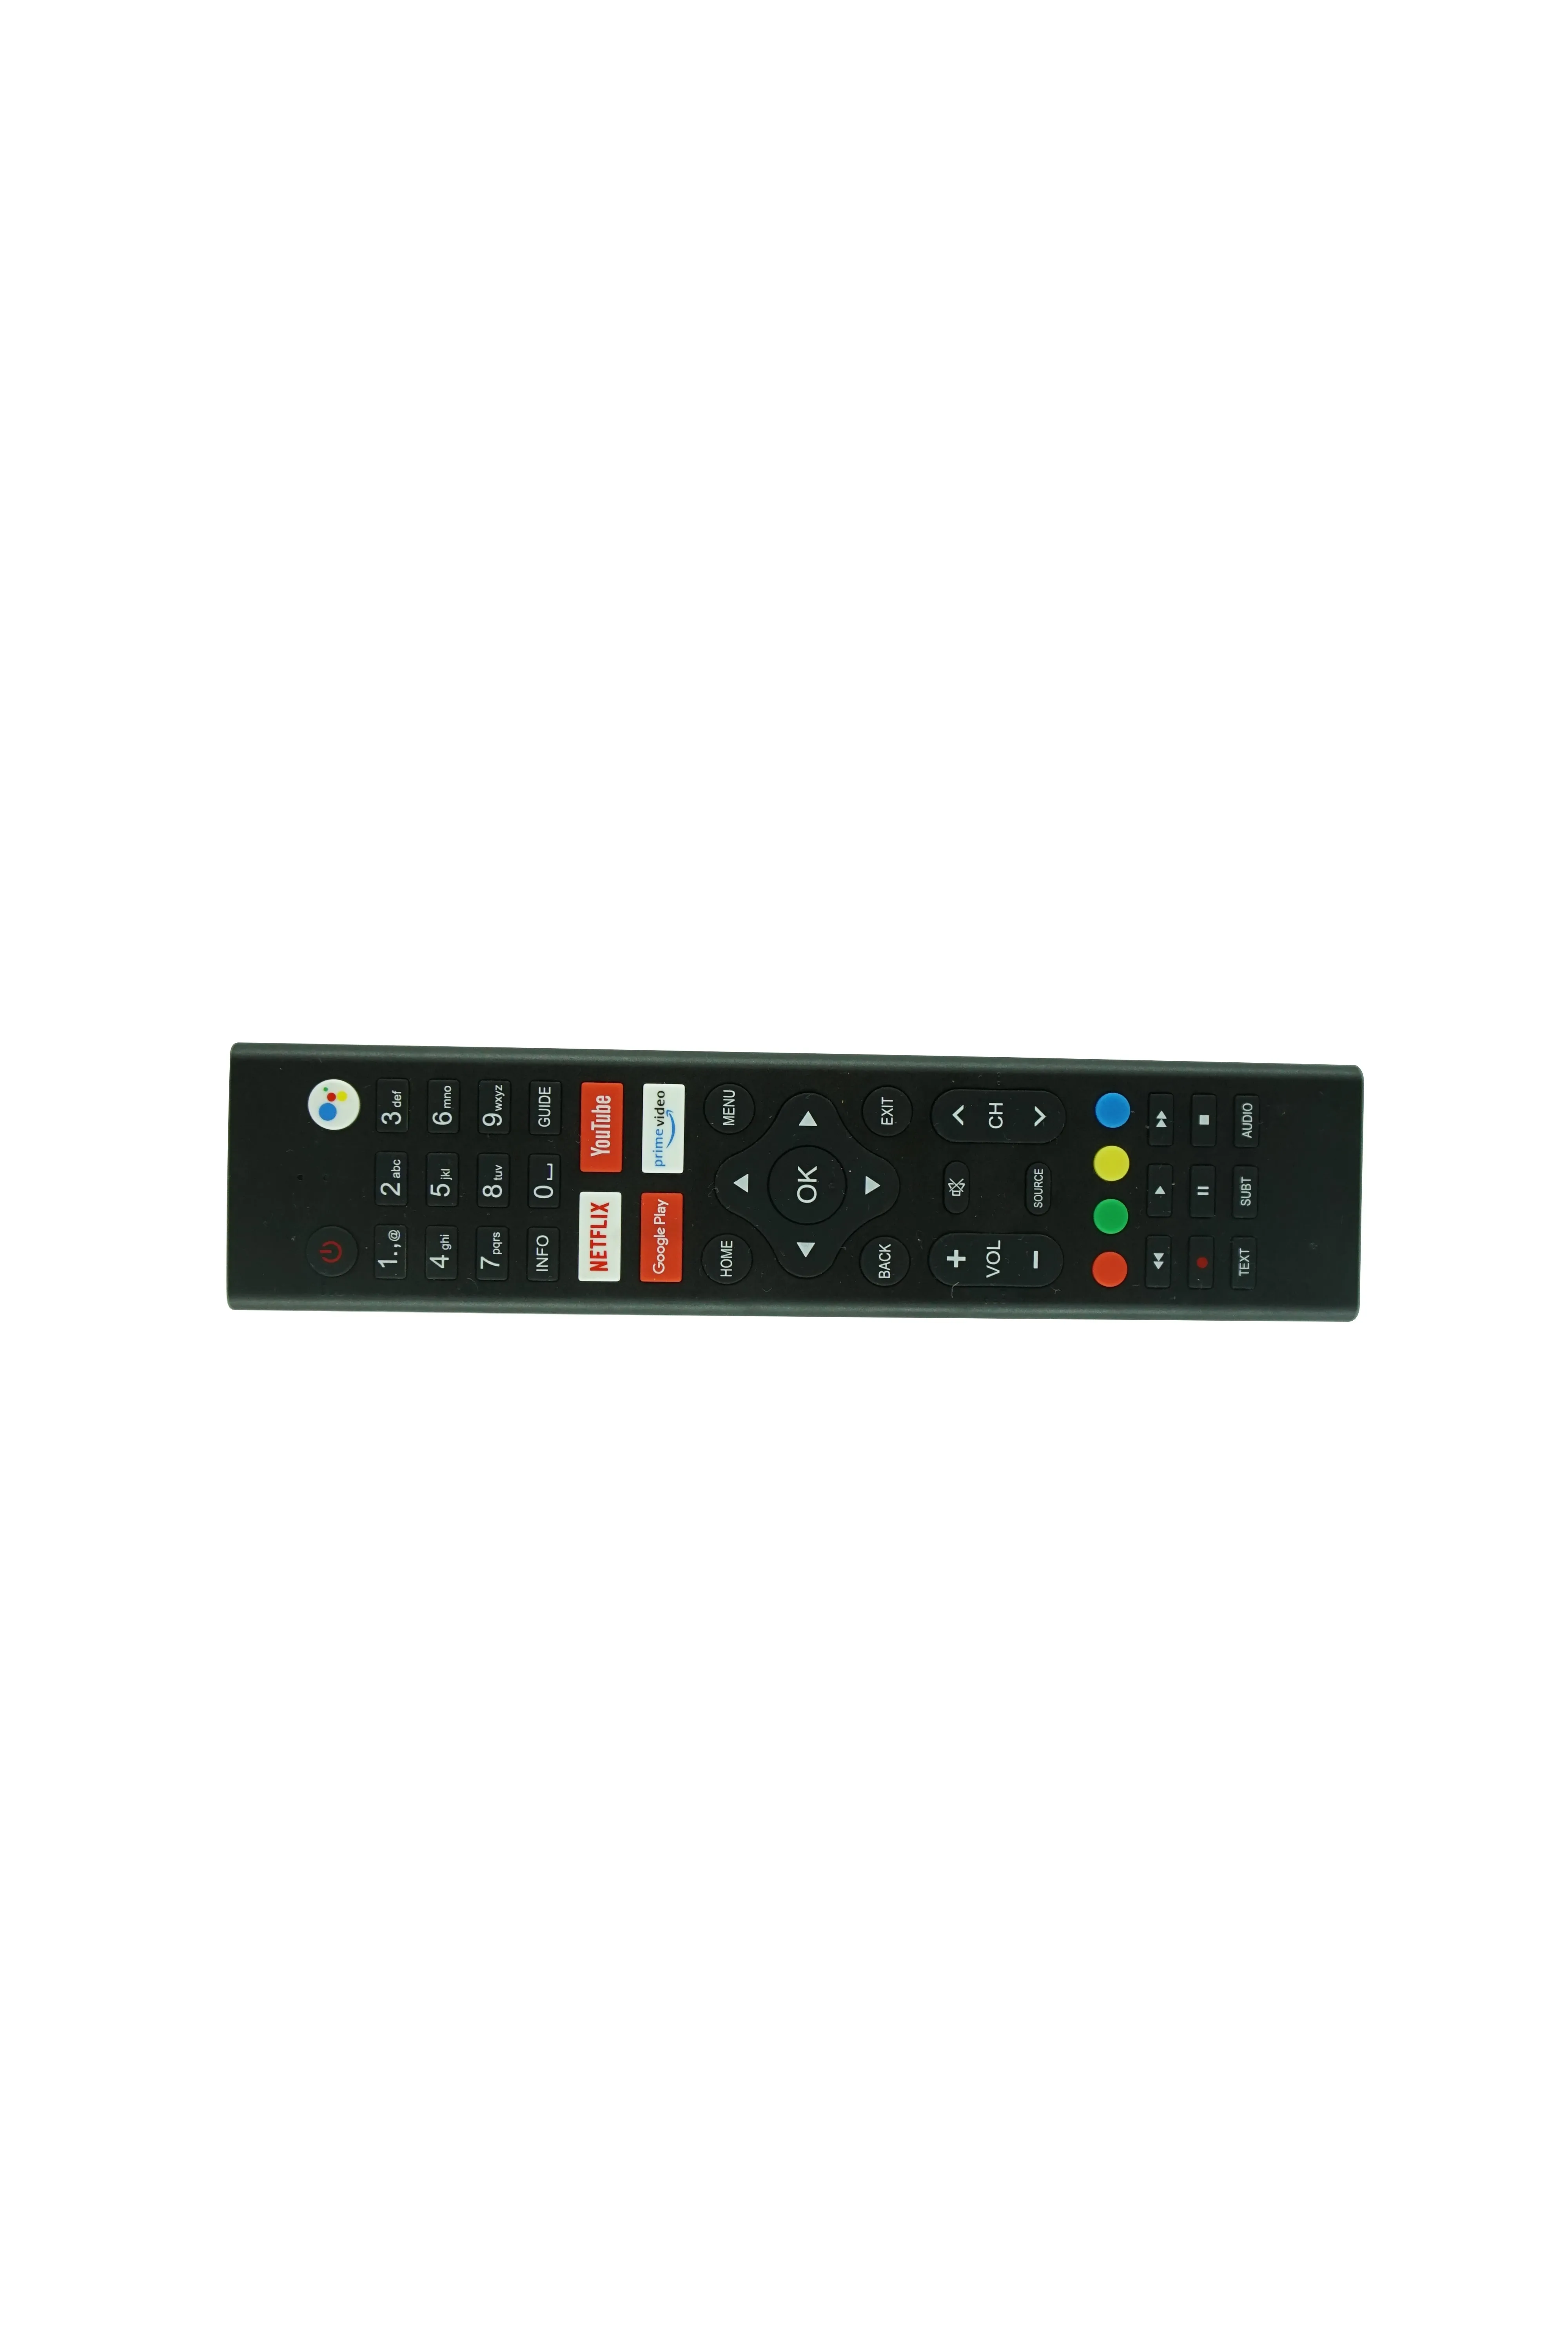 Voice Bluetooth zdalne sterowanie dla Engel MD0523 LE4090ATV LE3290ATV LE2490AV LE4290ATV LE5090ATV SMART LED LCD HDTV Android TV